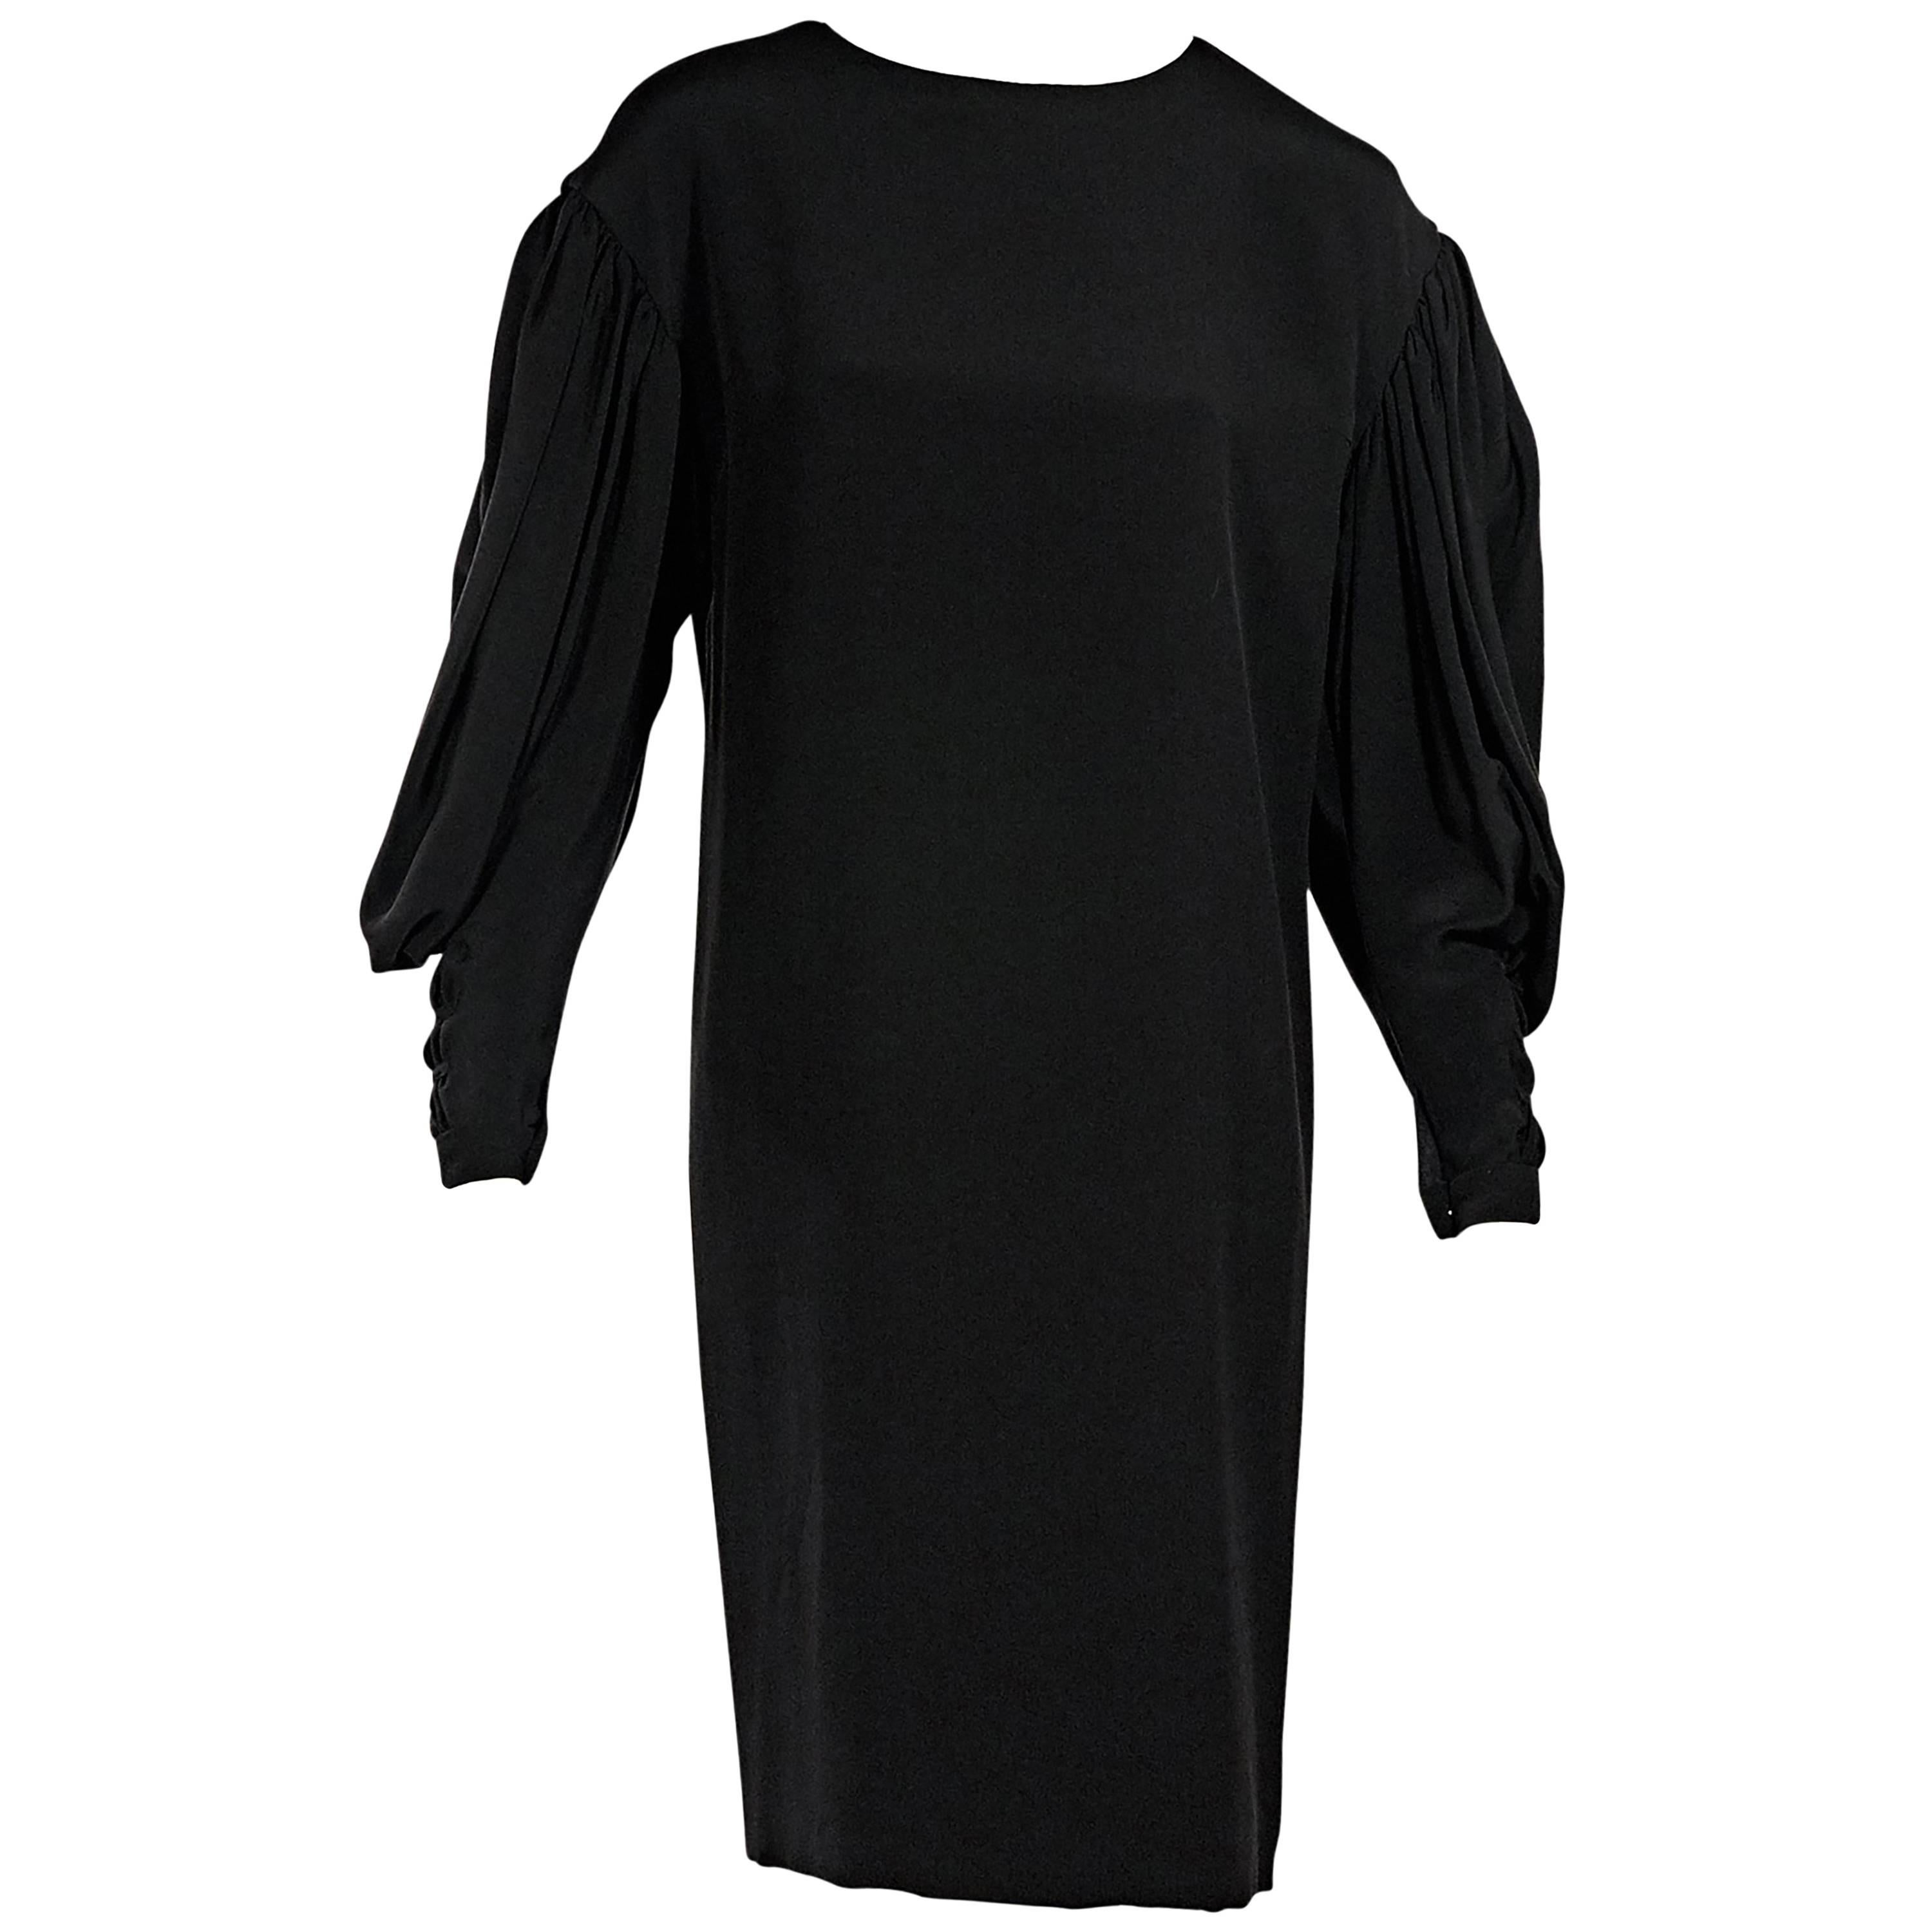 Black Vintage Chanel Long-Sleeve Dress